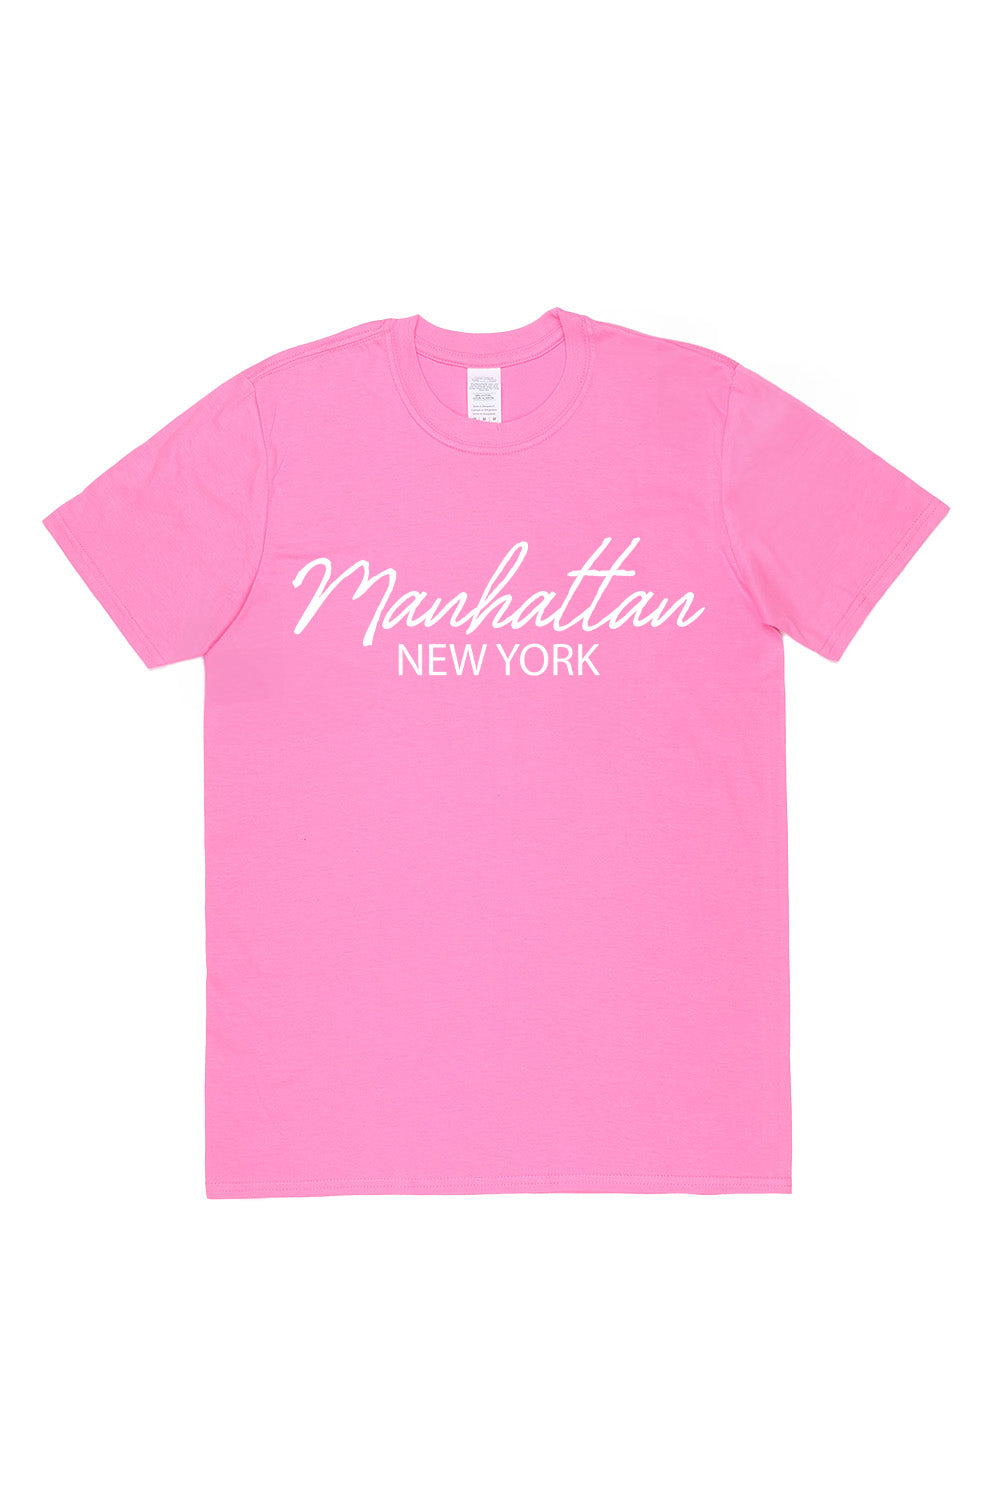 Manhattan T-Shirt in Azalea (Custom Packs)